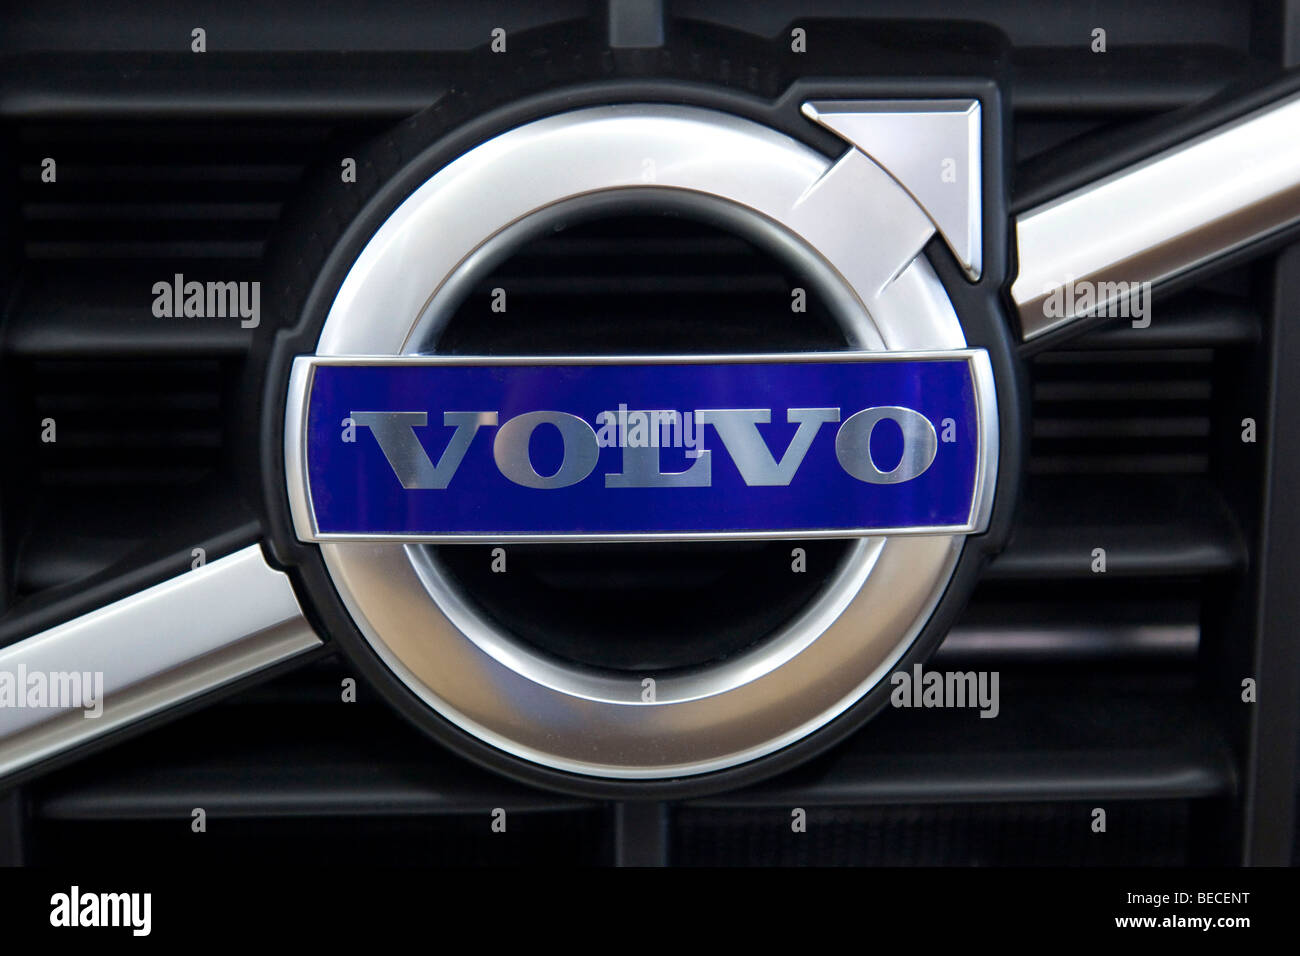 Volvo emblem on a car Stock Photo